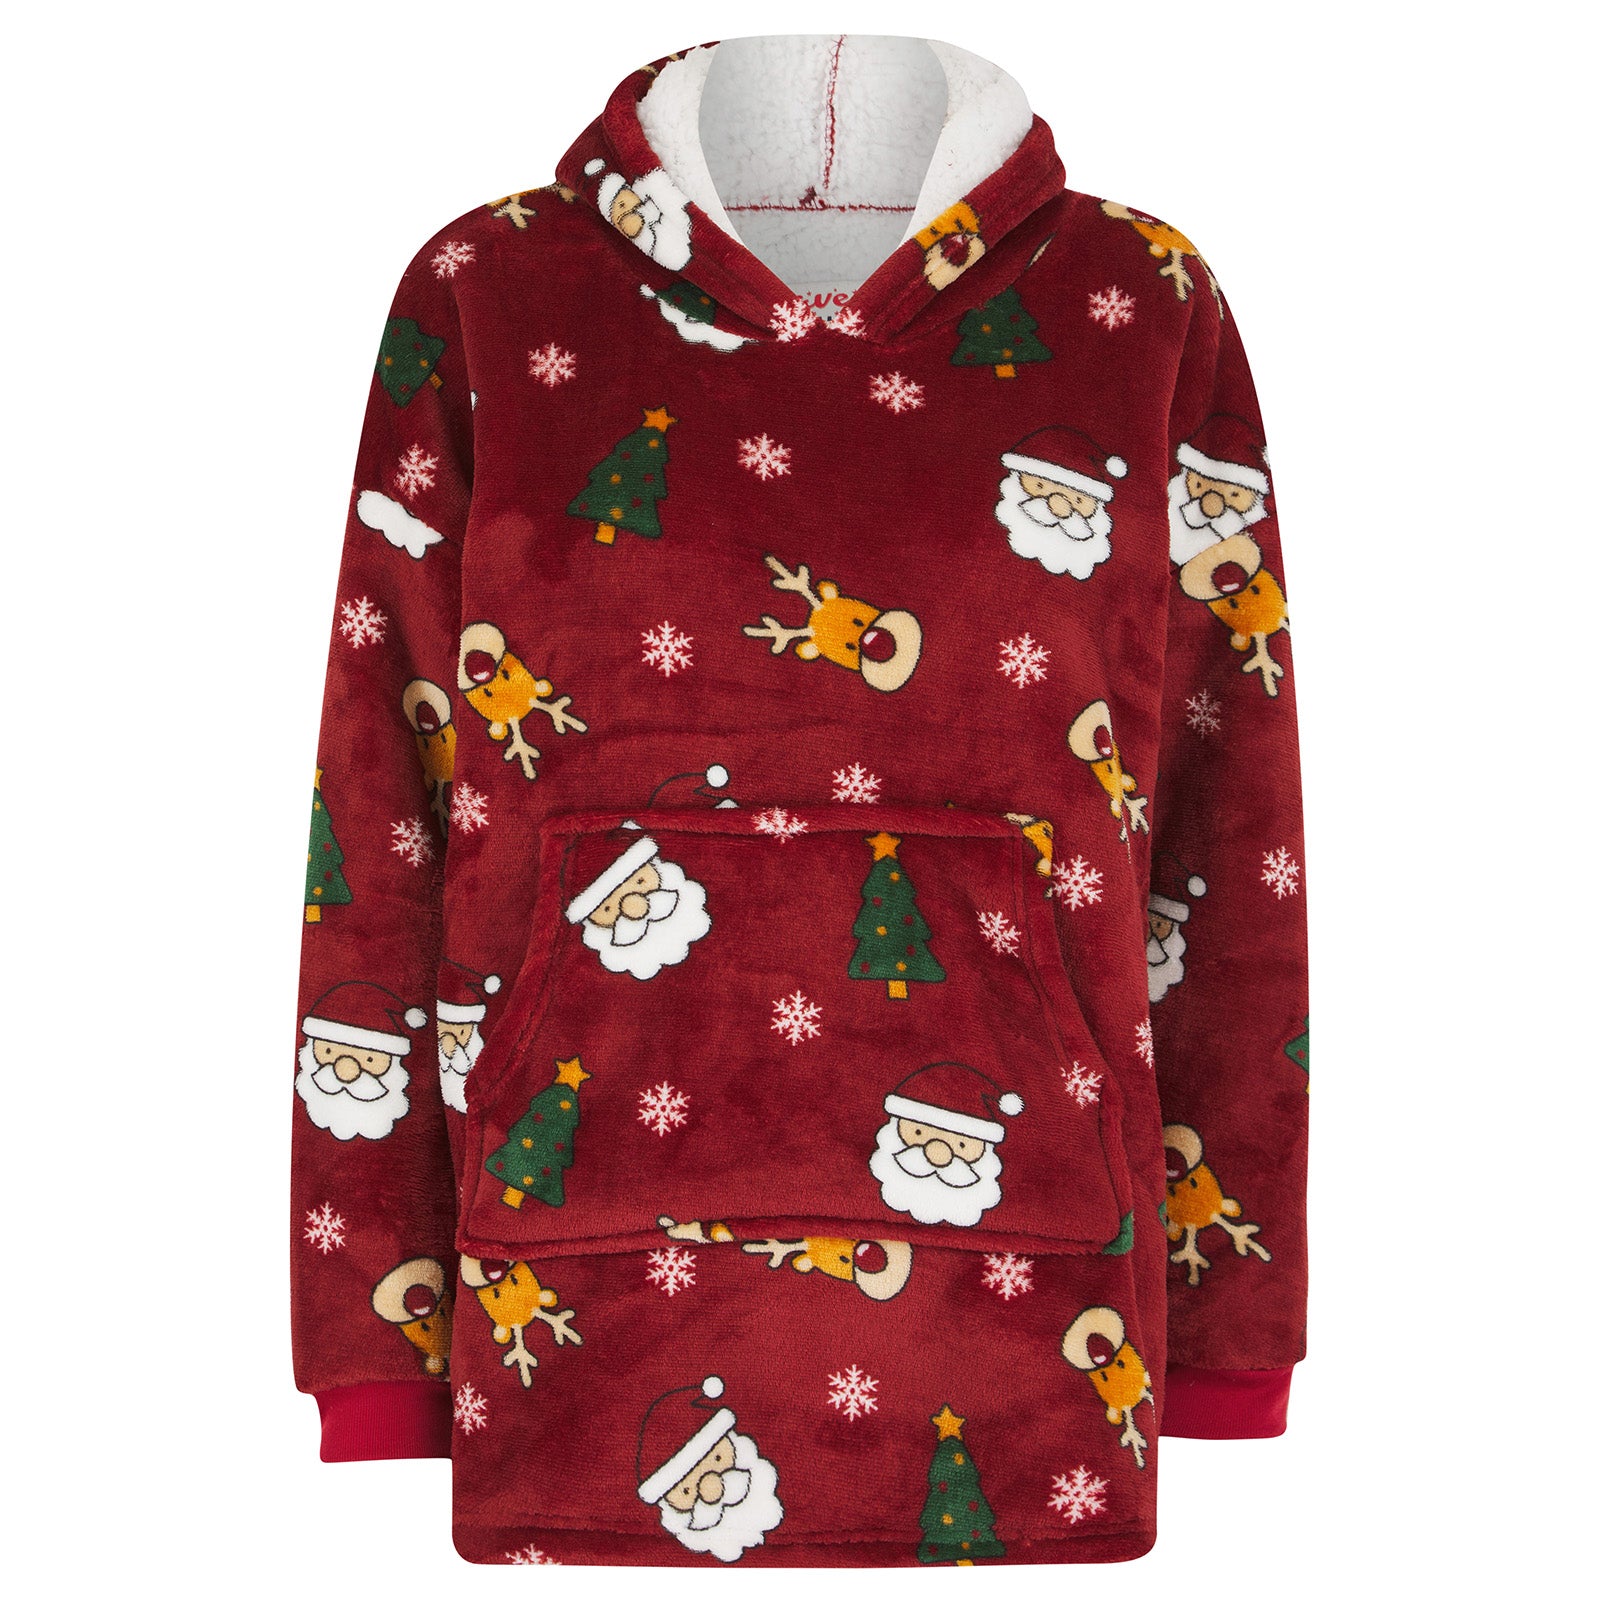 dark red kids hoodie with santa, reindeer and christmas tree pattern with think fleece lining